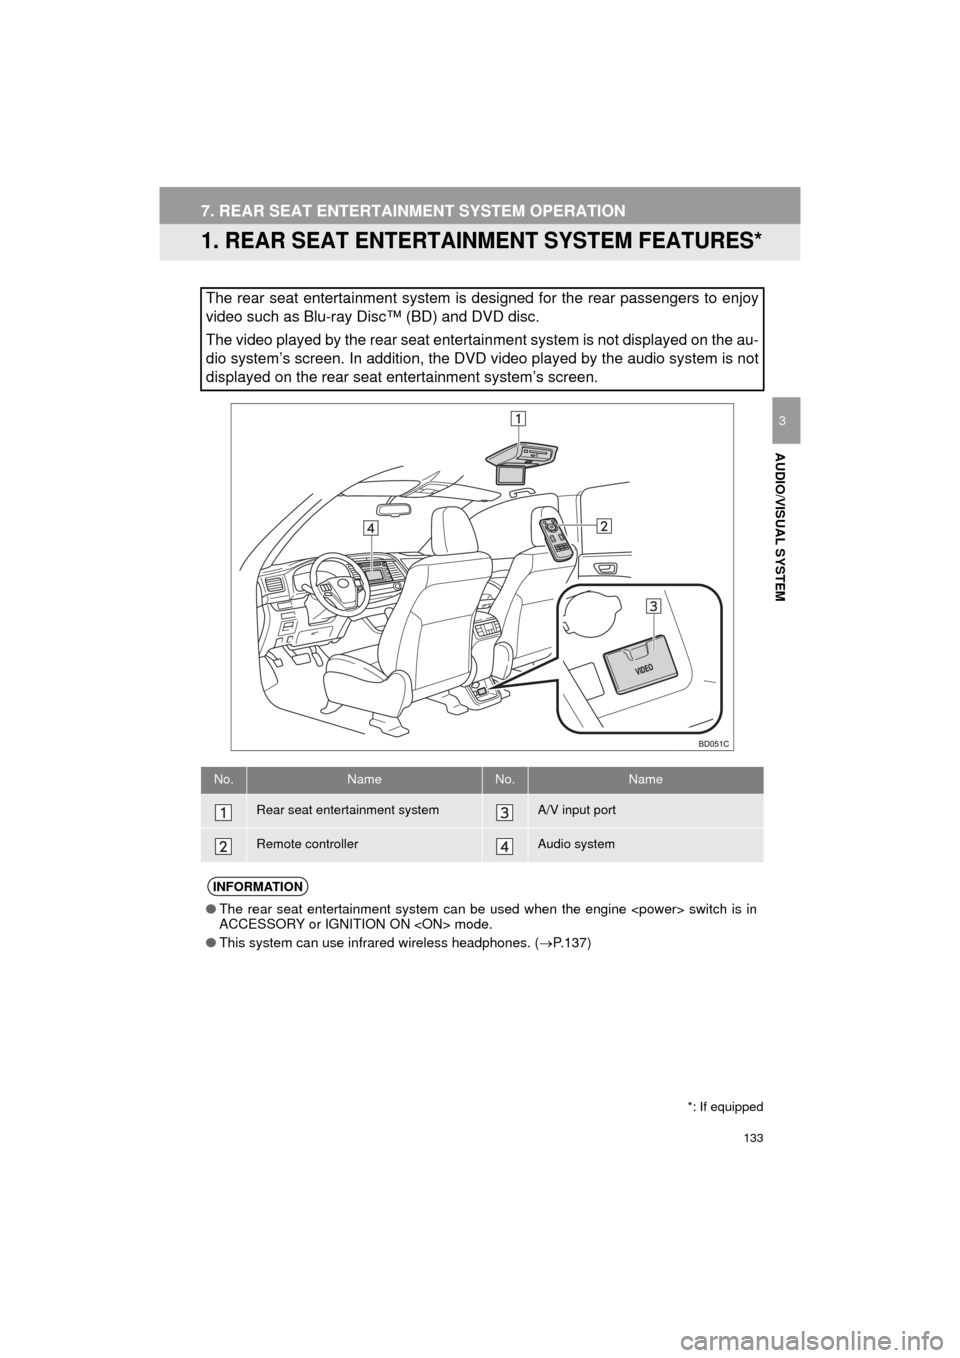 TOYOTA HIGHLANDER 2016 XU50 / 3.G Navigation Manual 133
HIGHLANDER_Navi_U
AUDIO/VISUAL SYSTEM
3
7. REAR SEAT ENTERTAINMENT SYSTEM OPERATION
1. REAR SEAT ENTERTAINMENT SYSTEM FEATURES*
The rear seat entertainment system is designed for the rear passenge